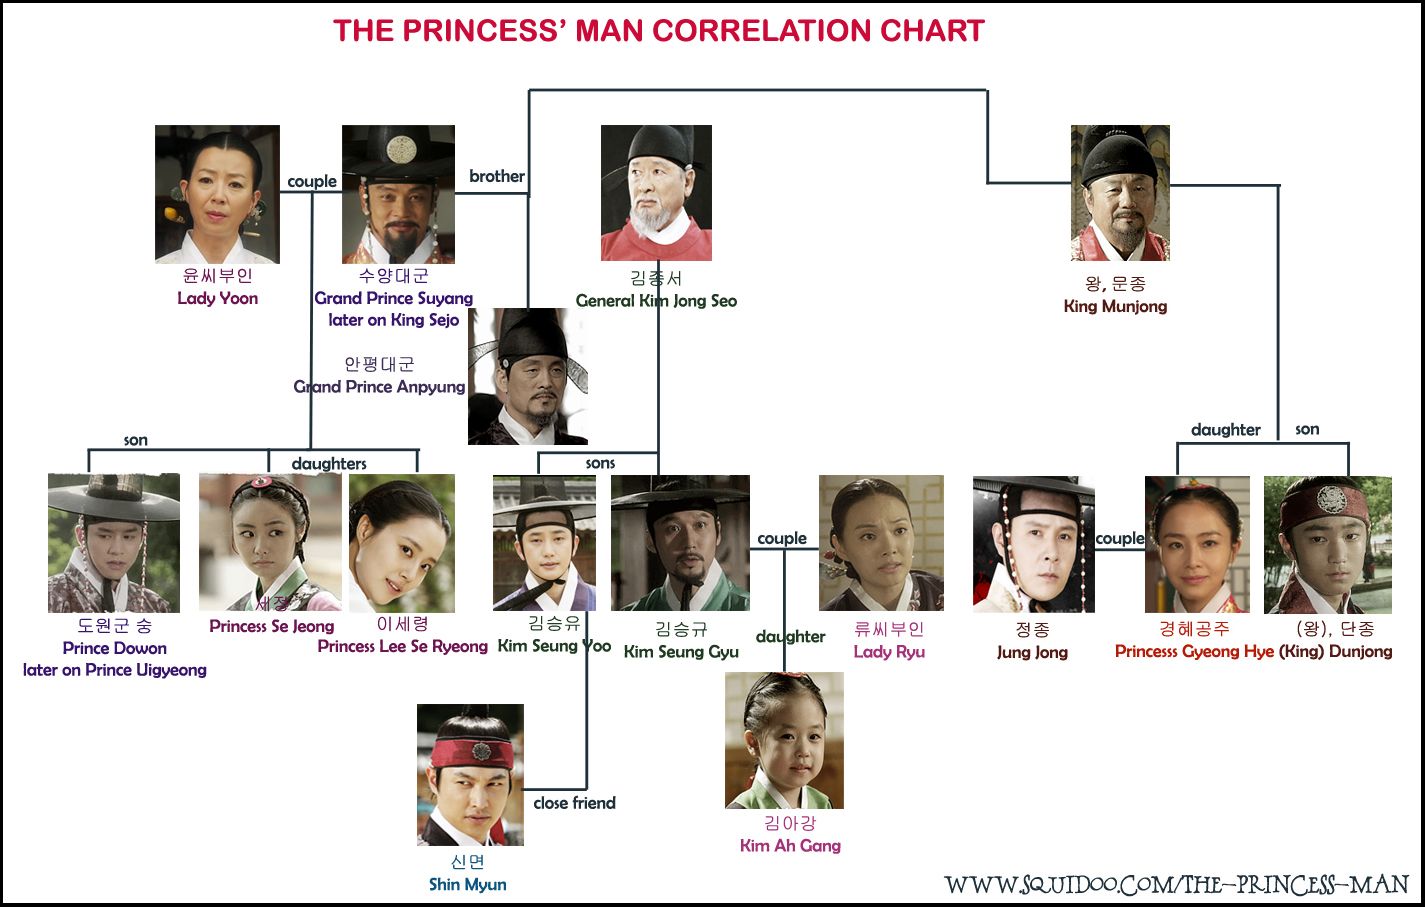 The Princess' Man Correlation Chart